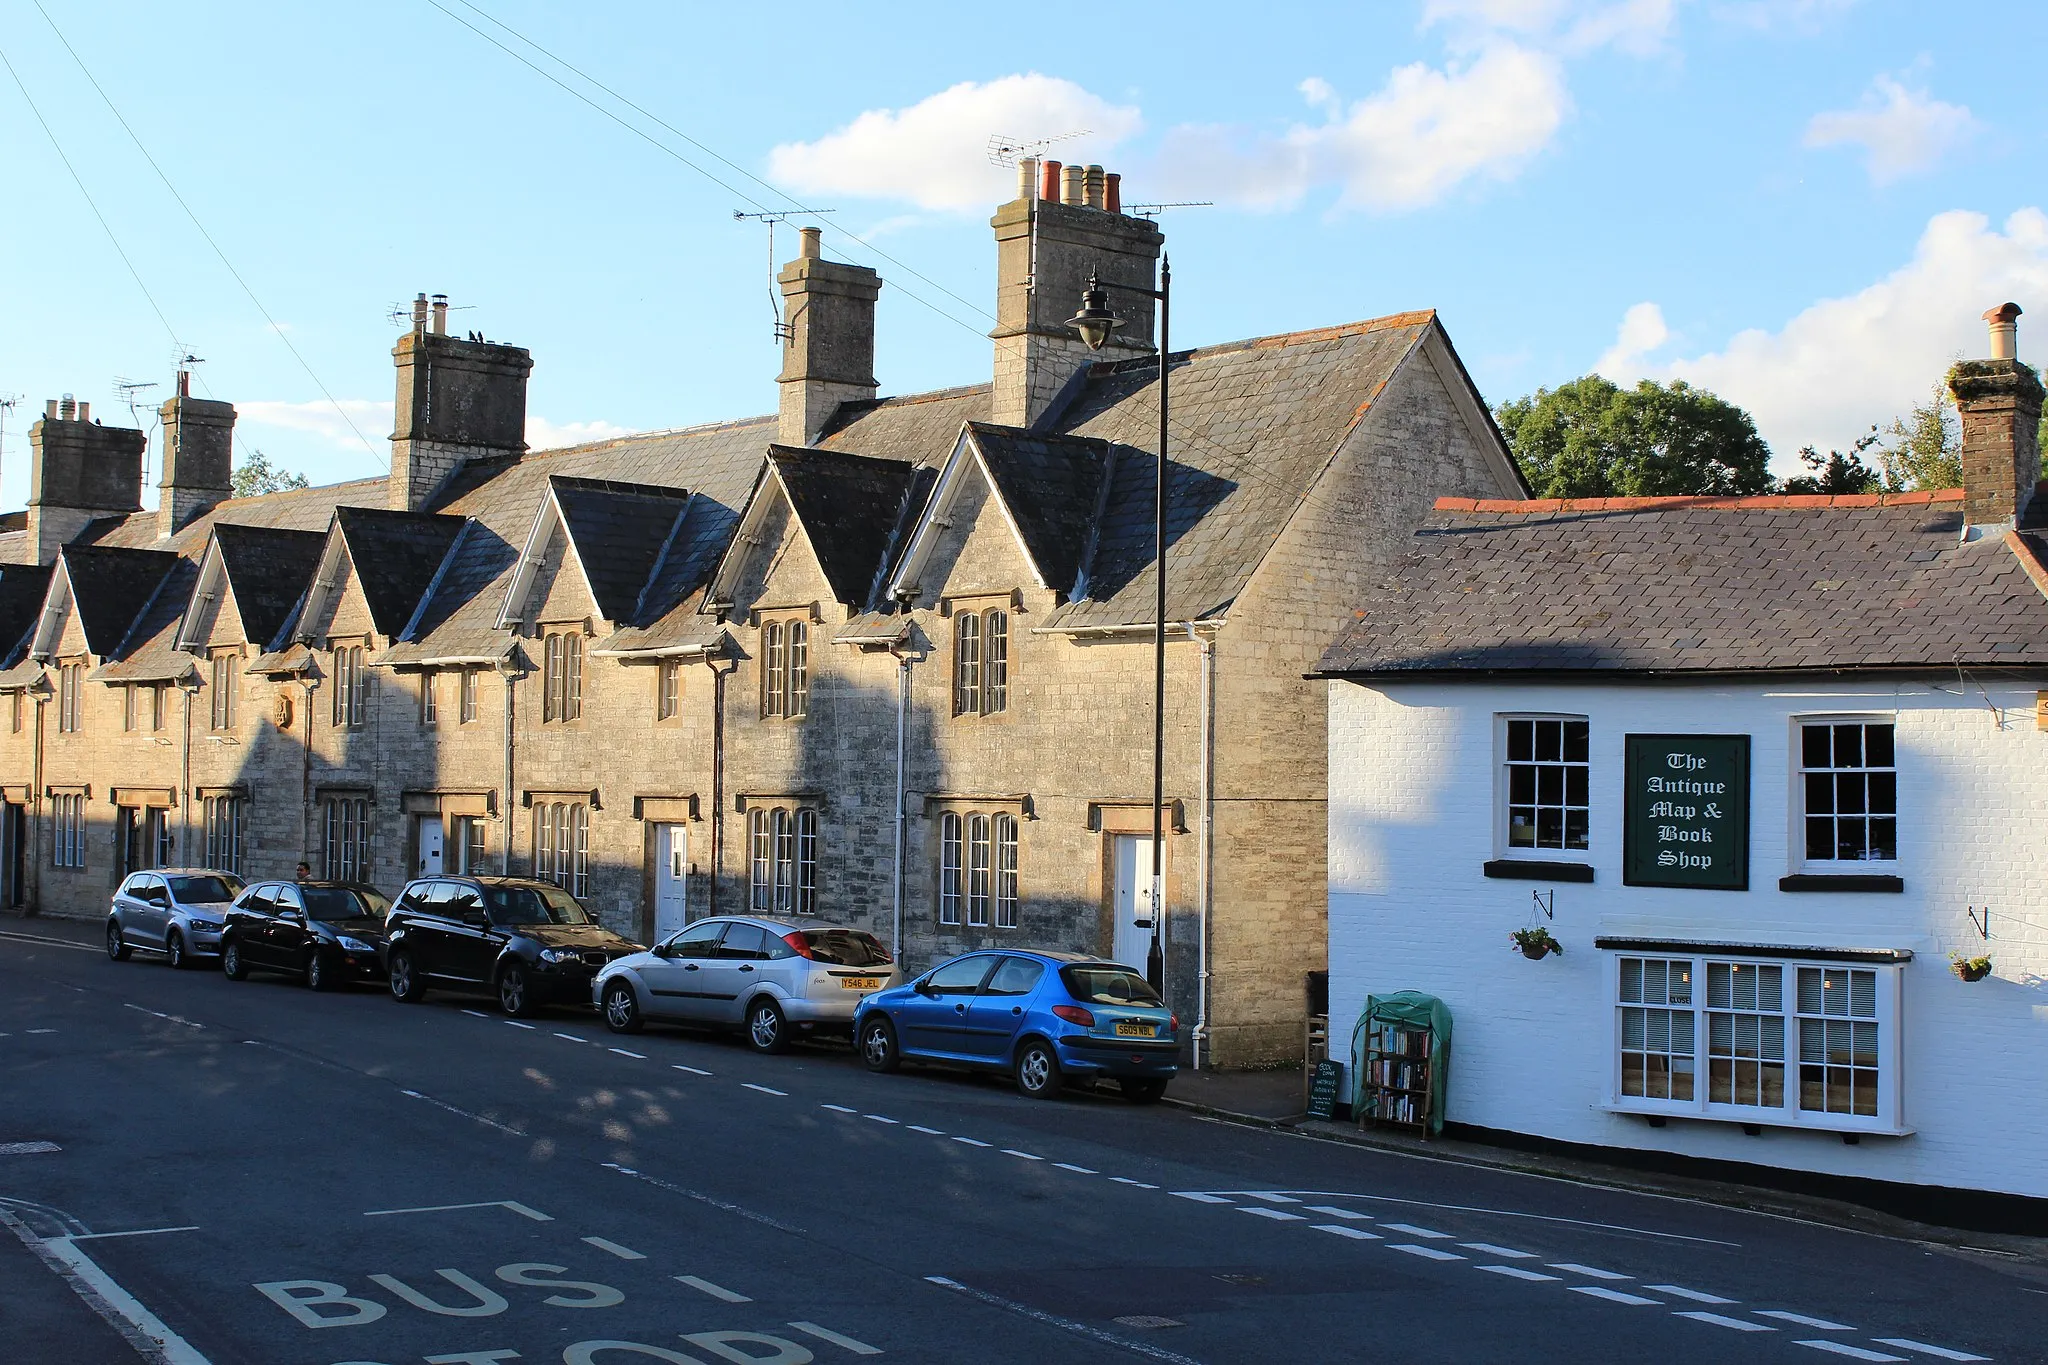 Photo showing: High Street, Puddletown, Dorset, England, on 1 September 2015